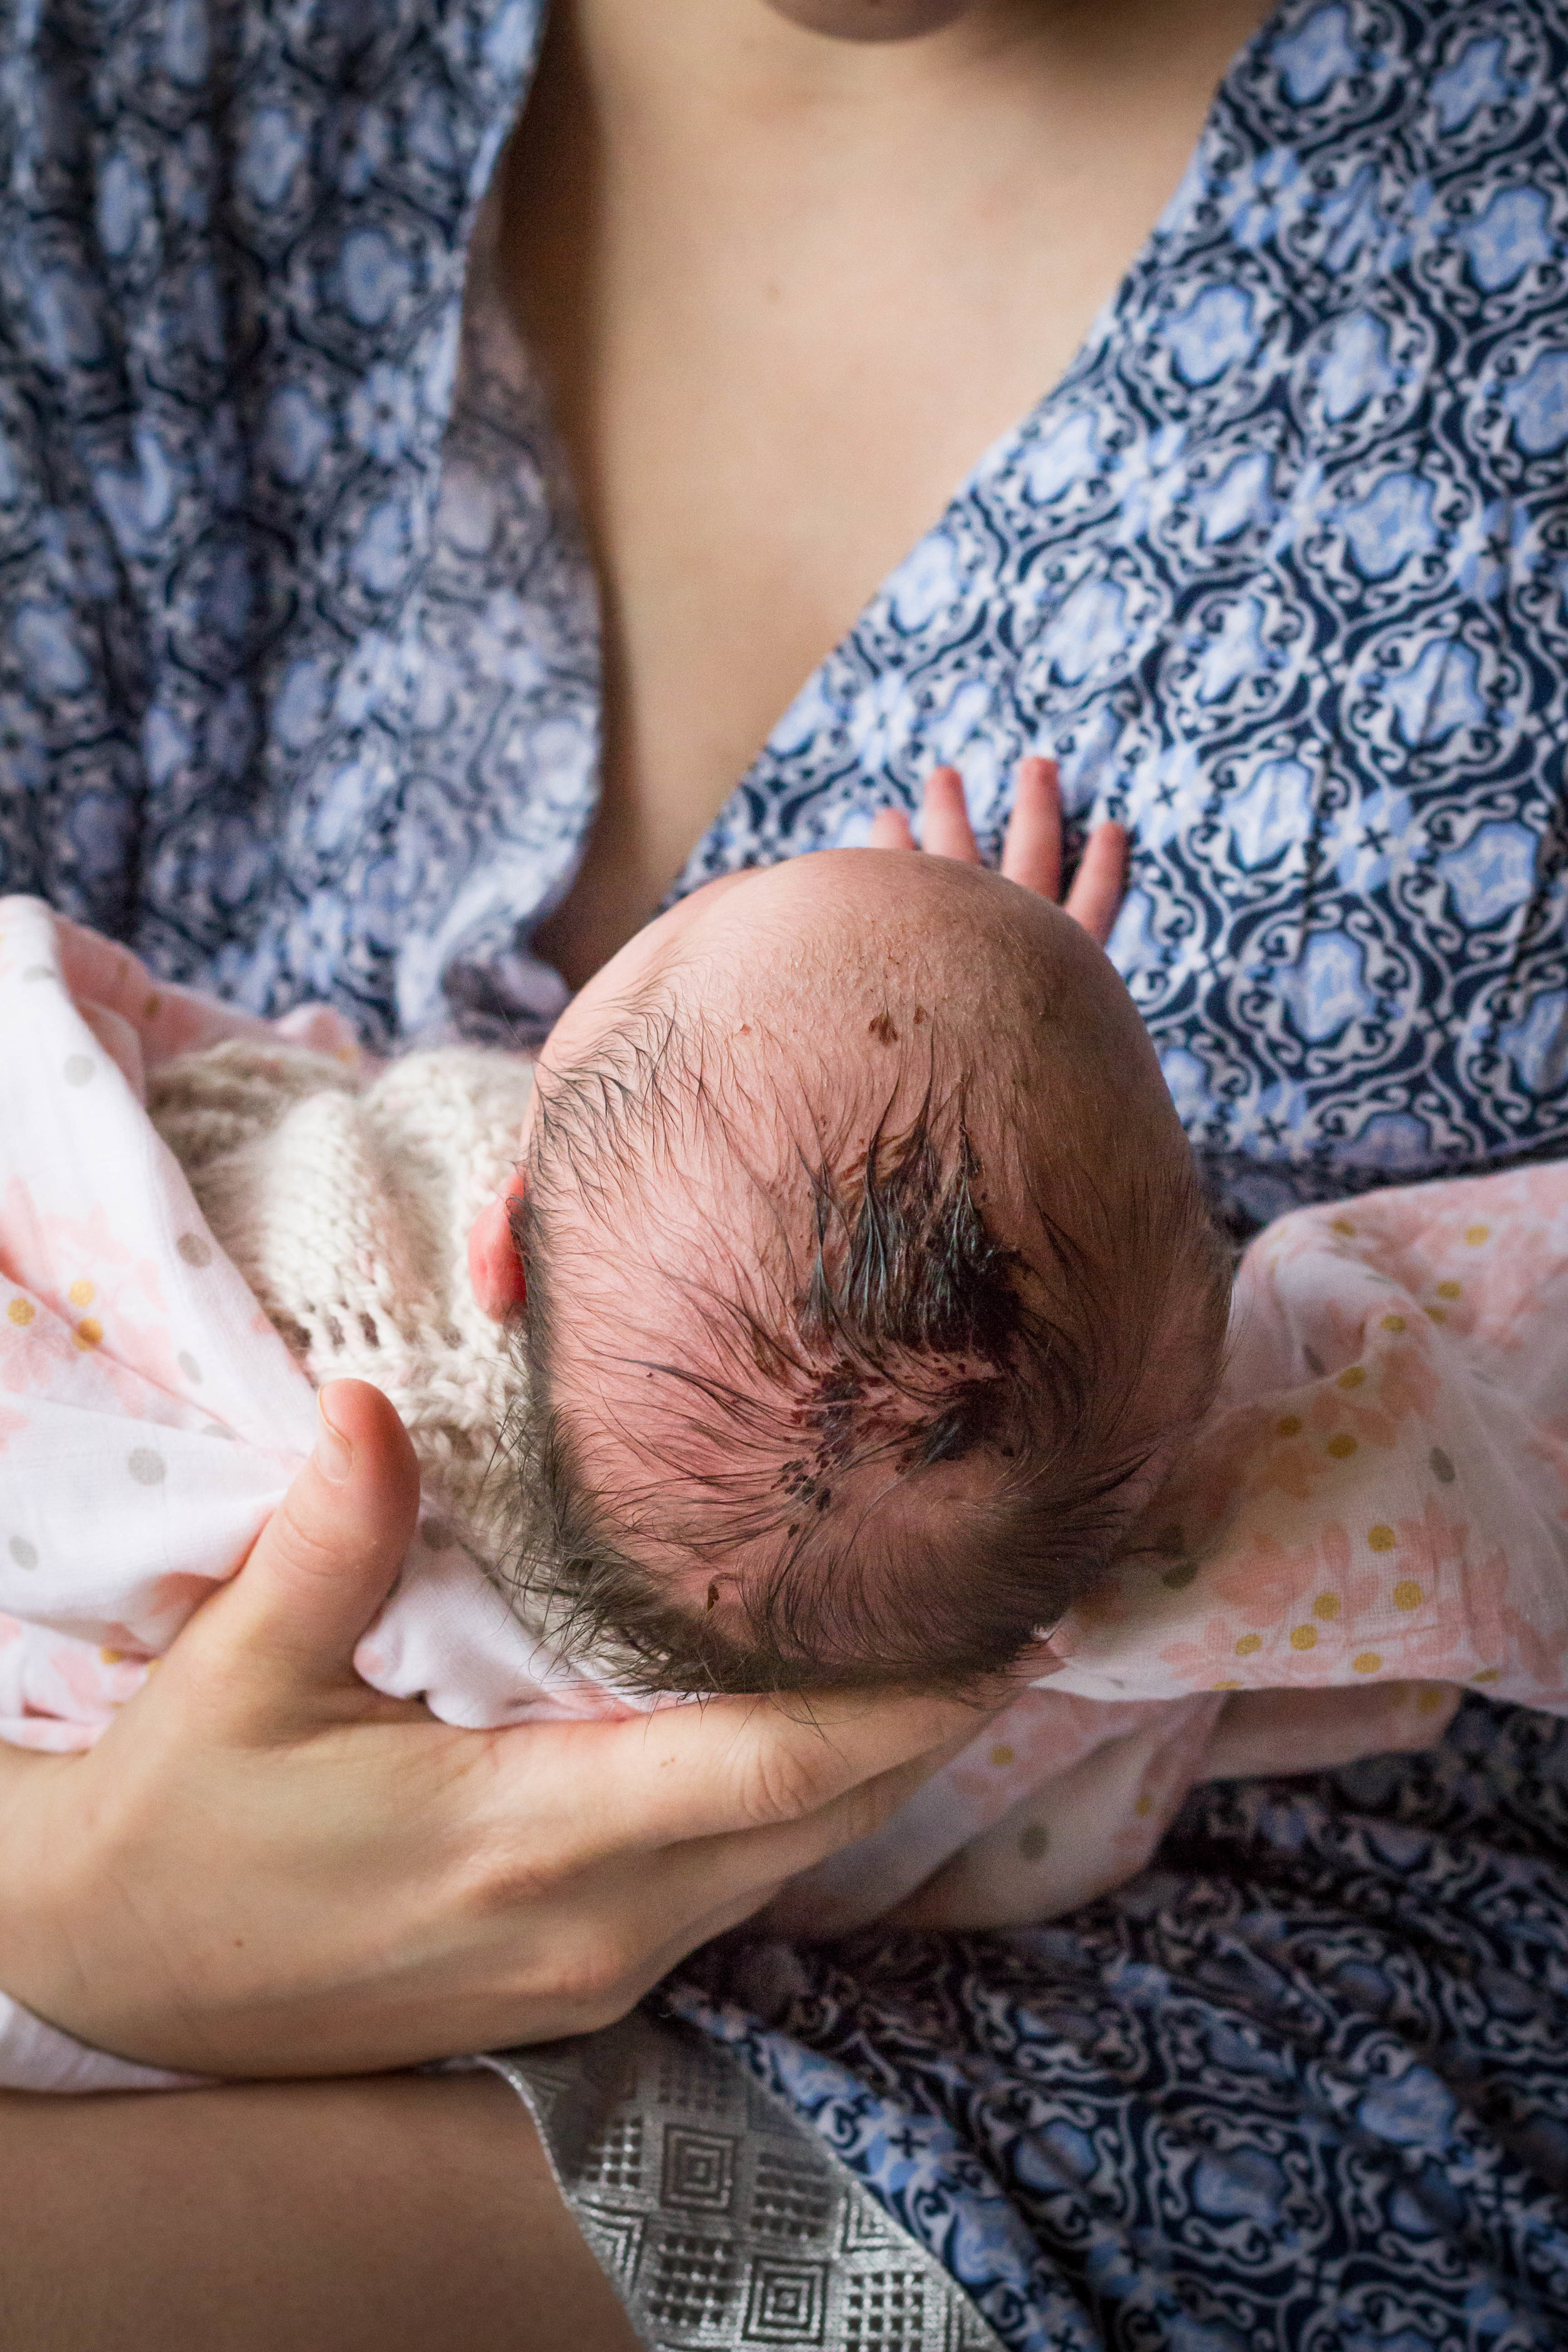 Newborn home birth | Jaime Bugbee Photography